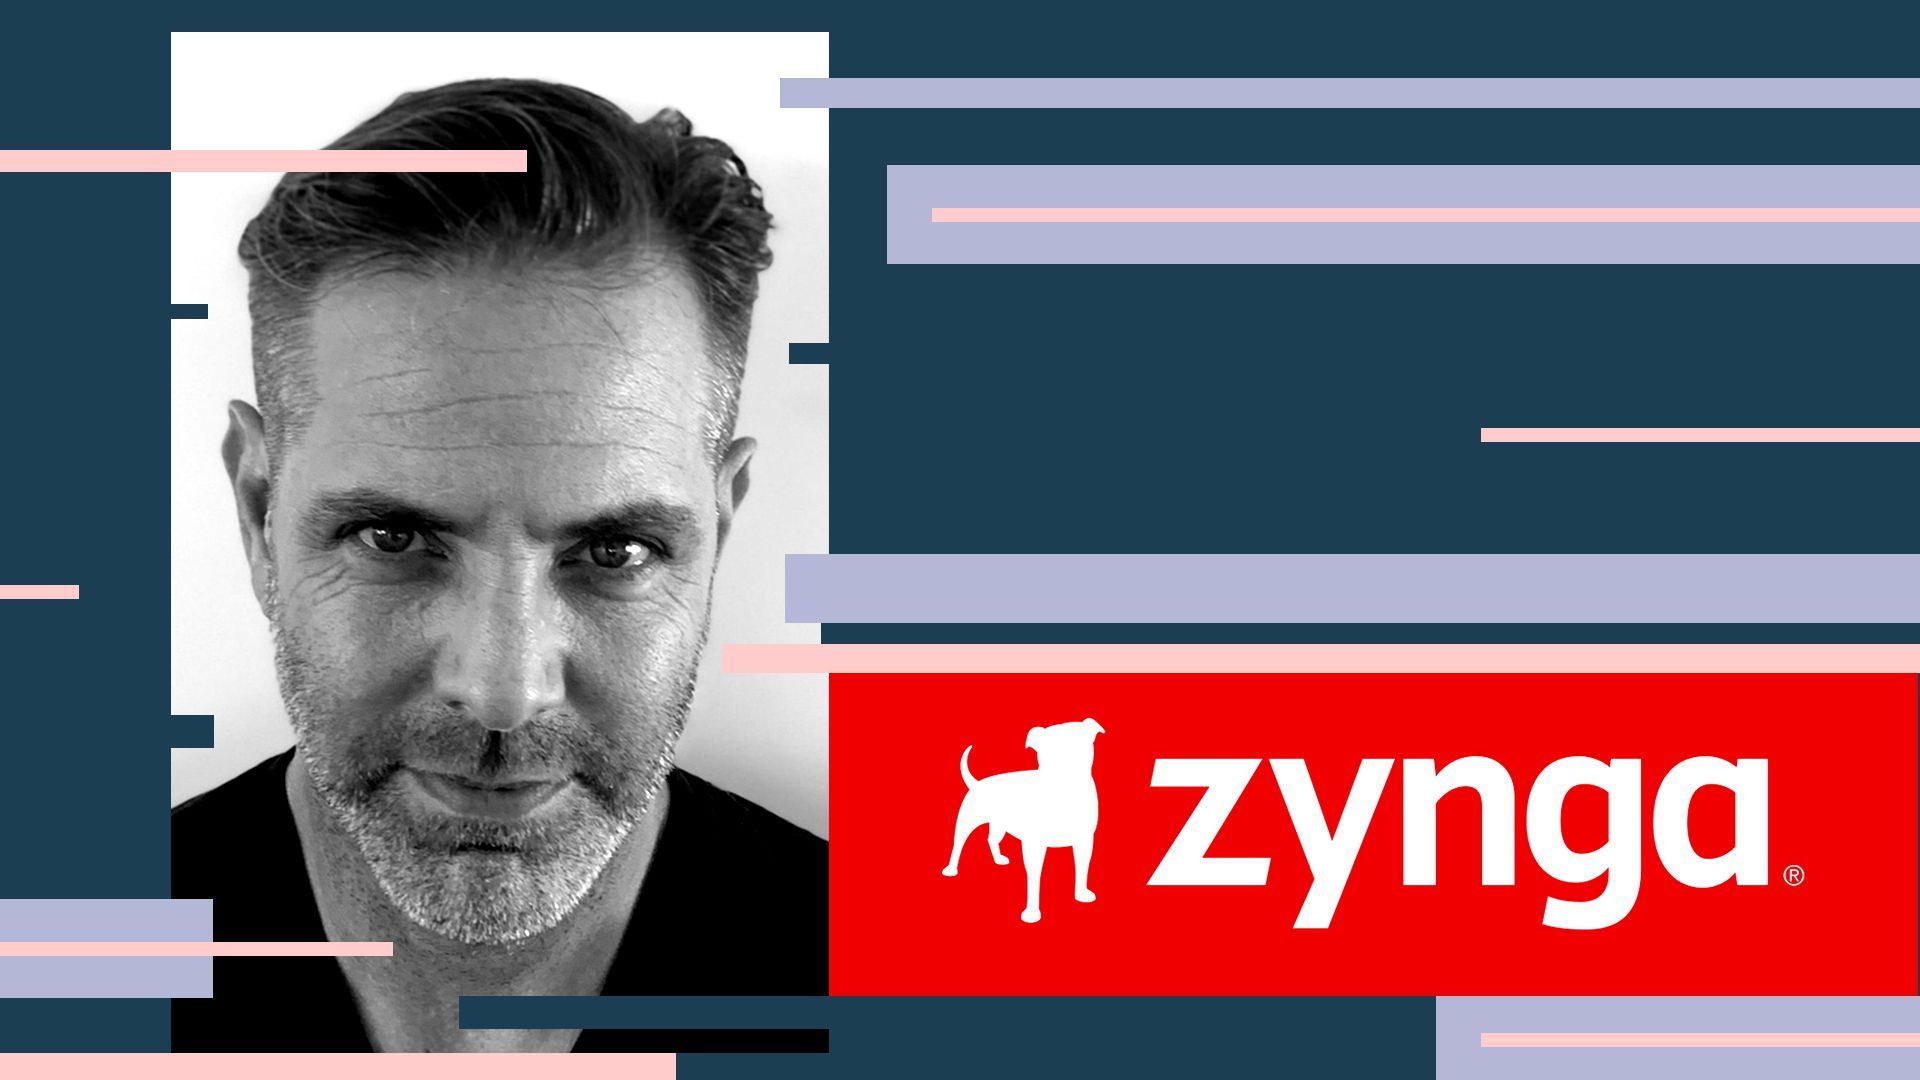 Photo collage illustration of Matt Wolf and the Zynga logo